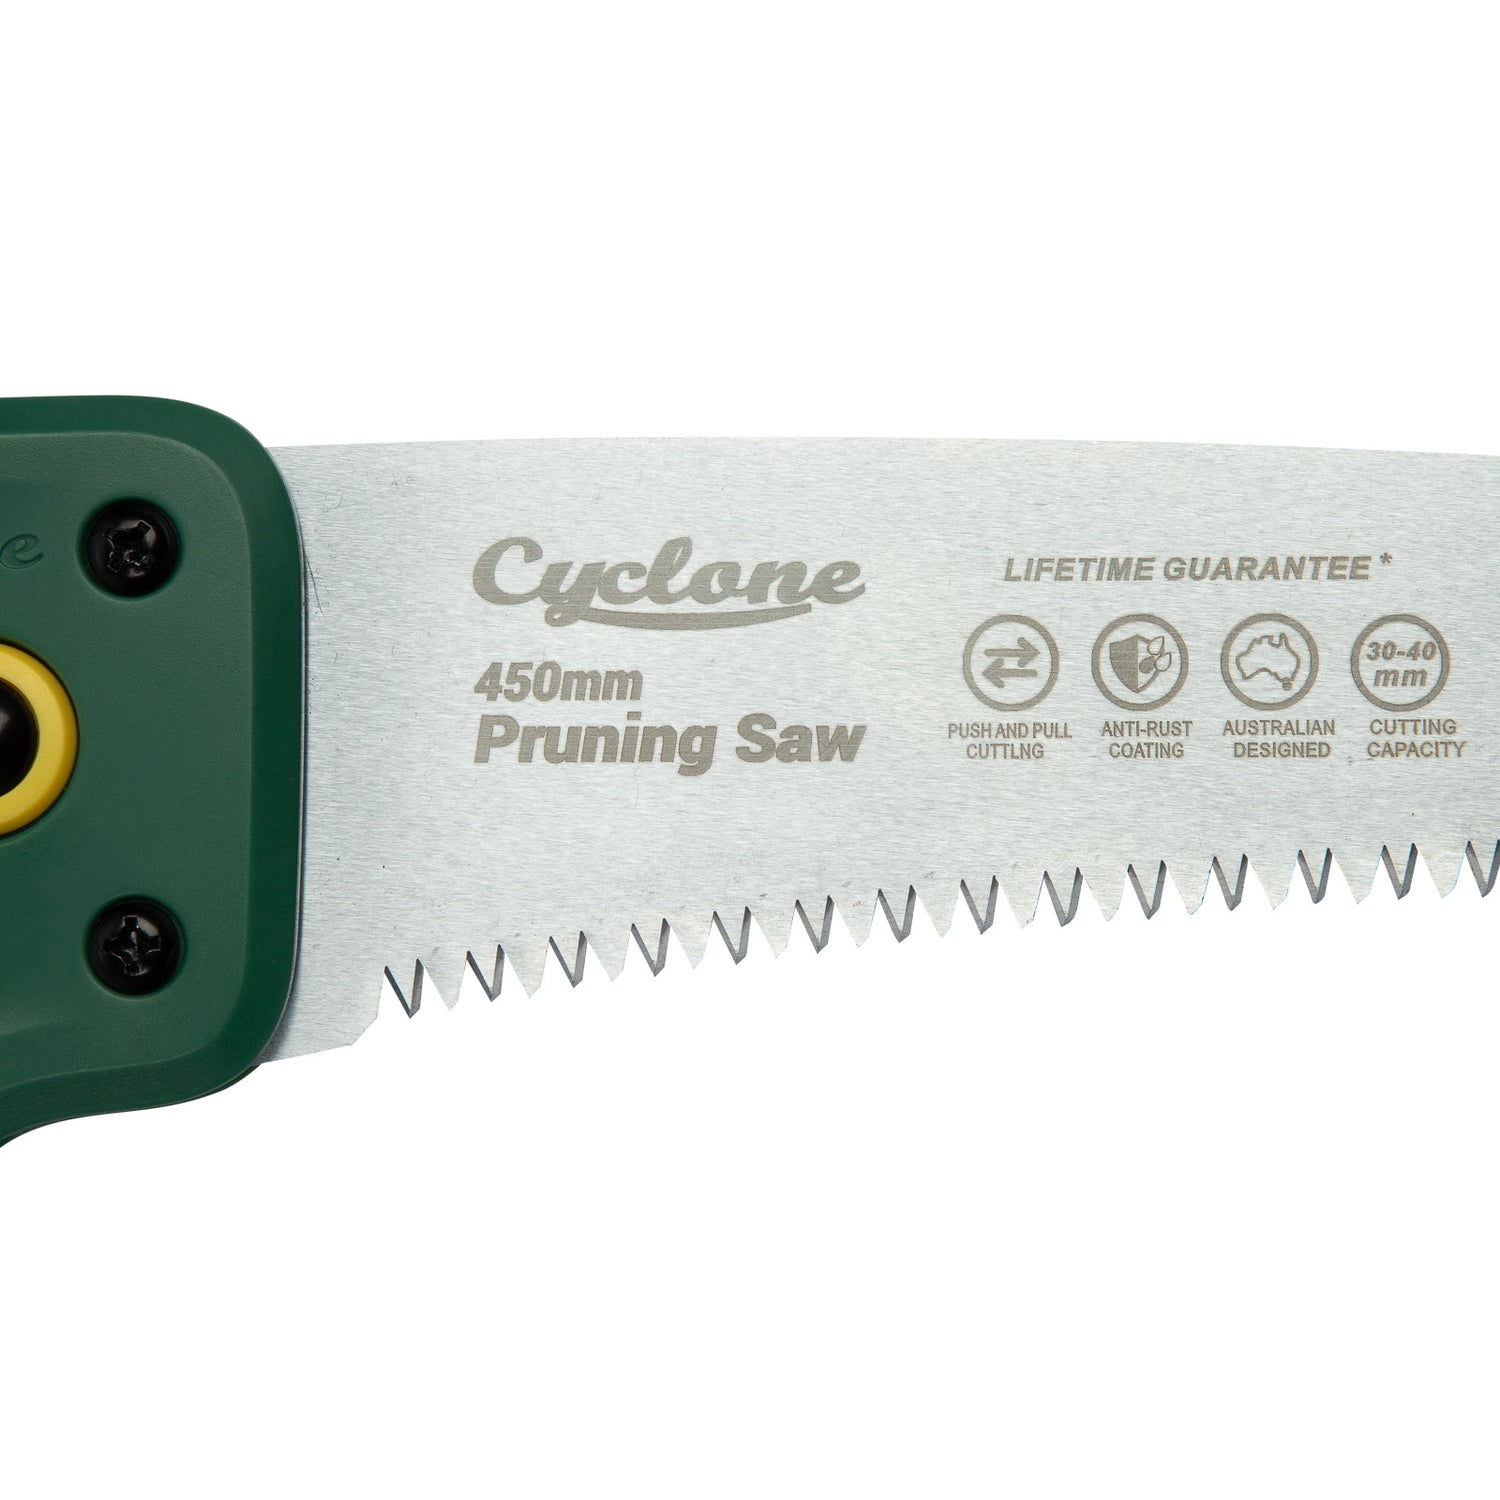 450mm Pruning Saw